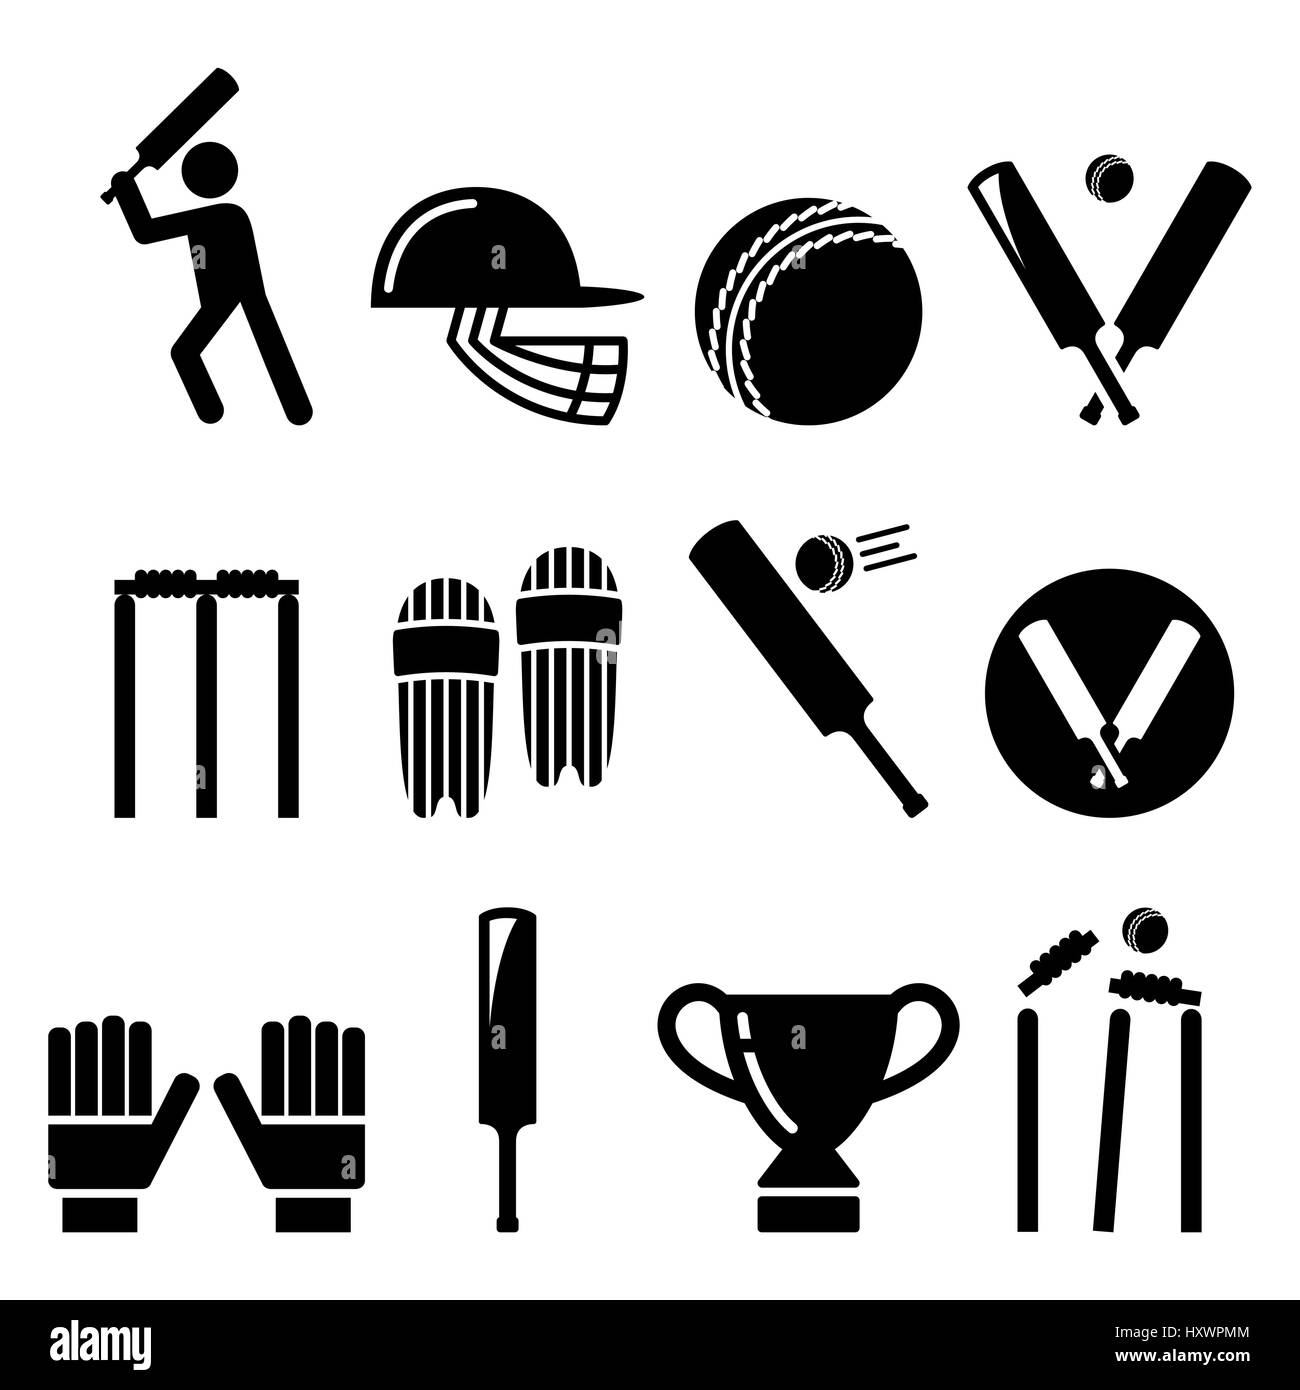 Cricket bat, man playing cricket, cricket equipment - sport icons set Stock Vector